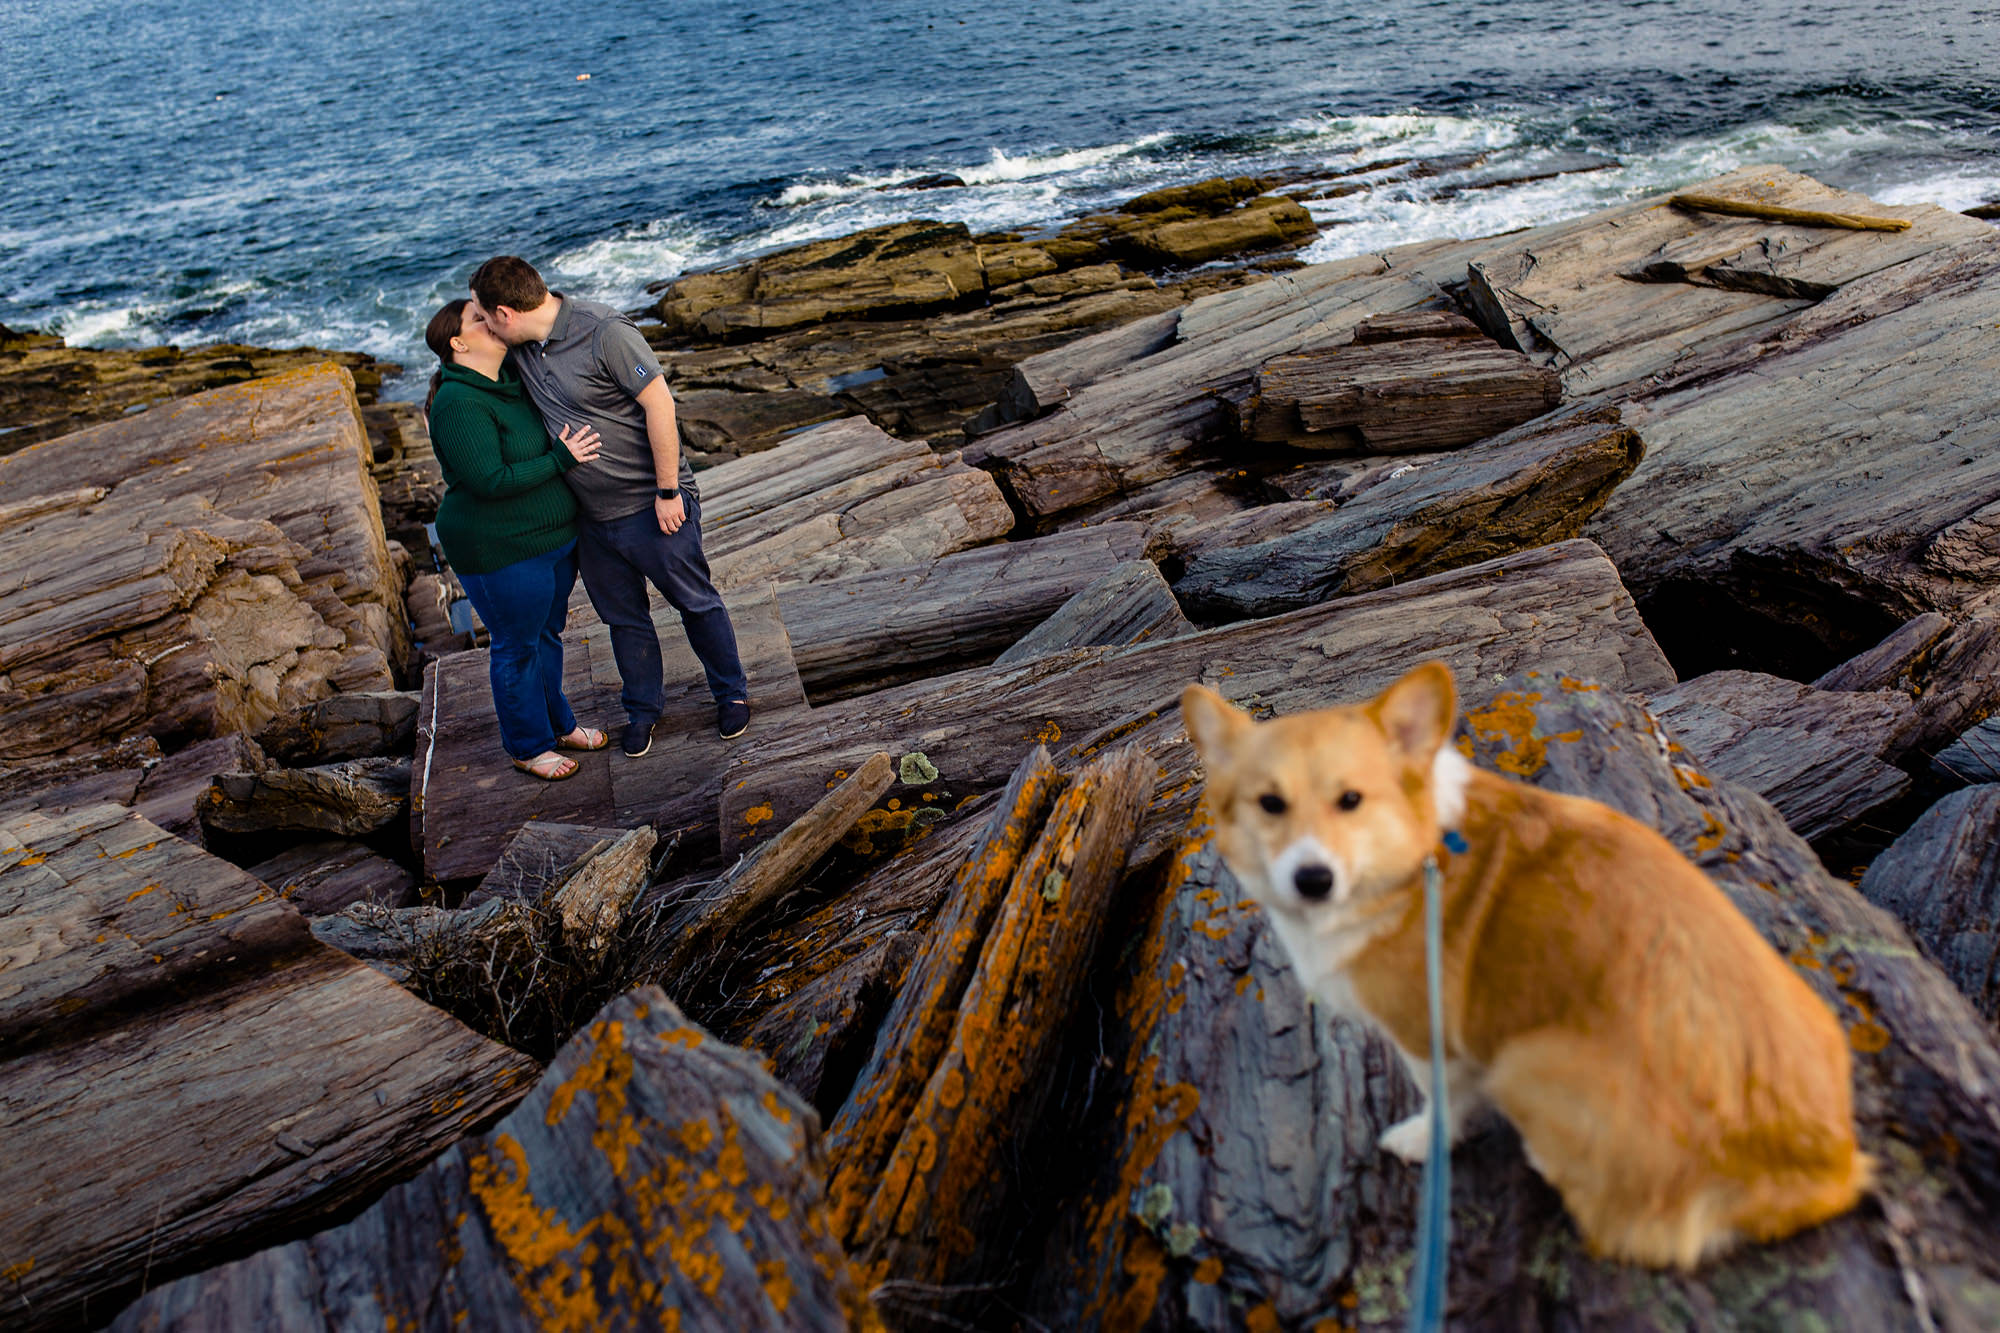 Engagement portraits taken in Cape Elizabeth, Maine